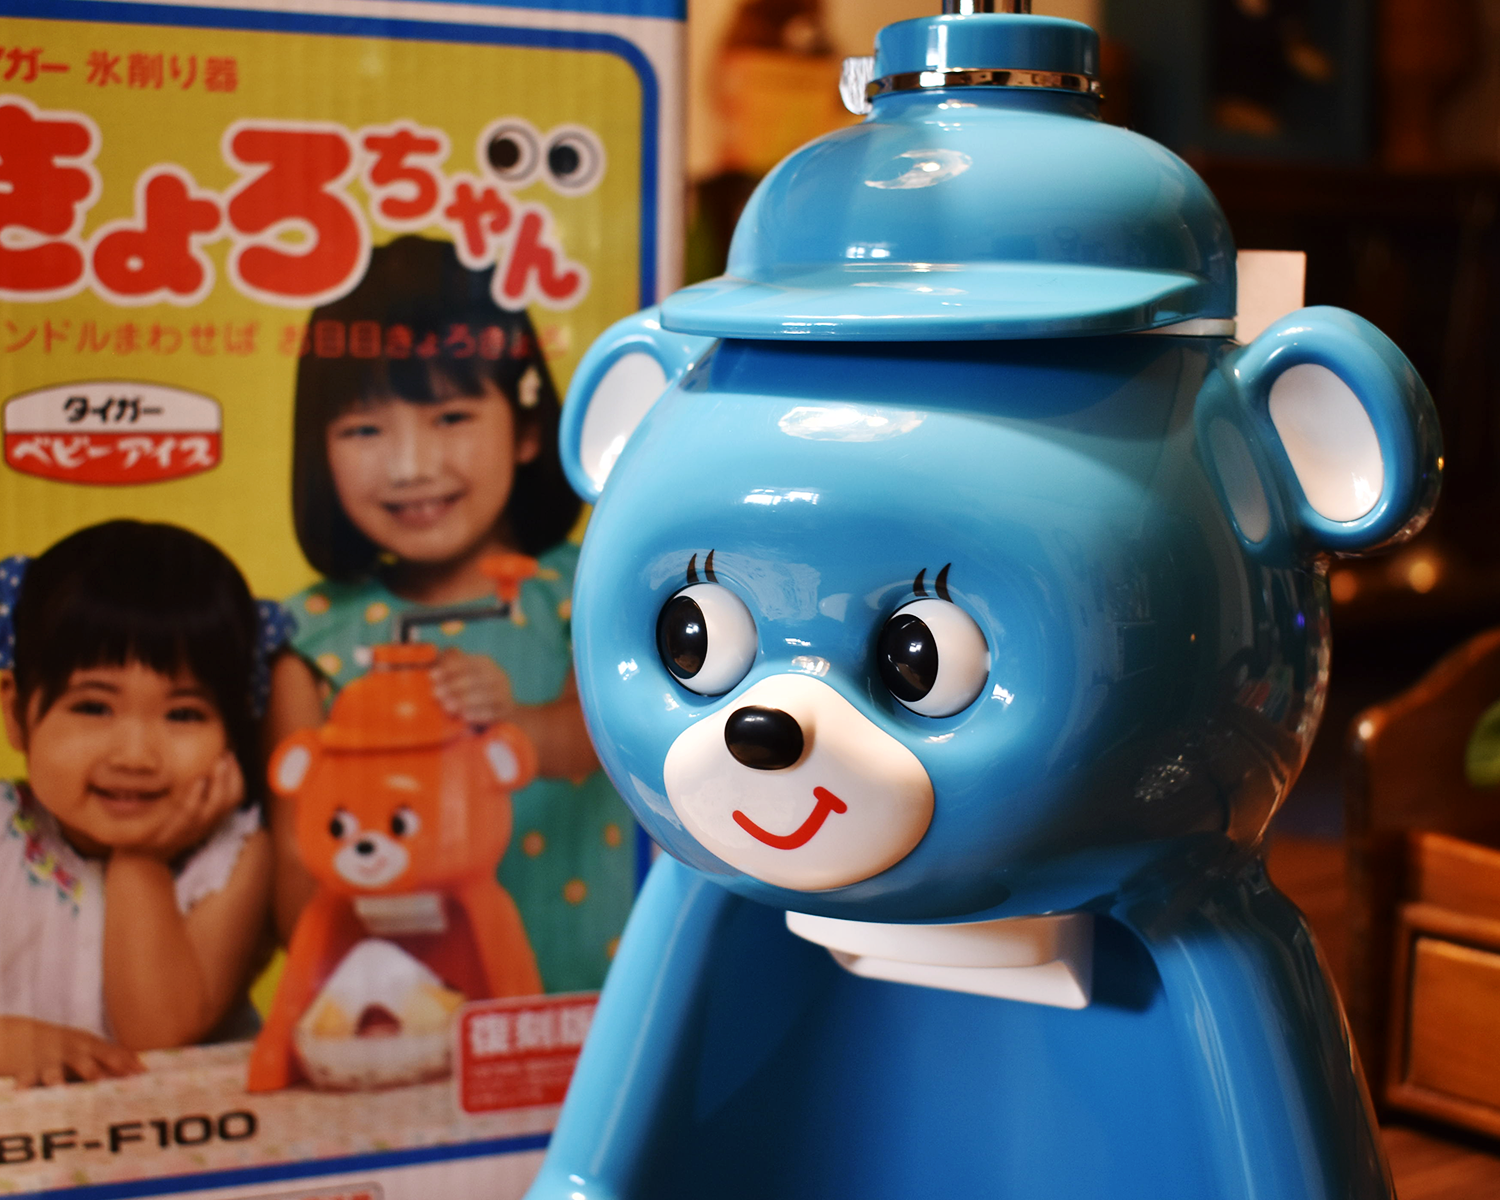 TIGER Ice Shaver "Kyoro-Chan" Reissue Edition ABF-F100 Blue(AK)